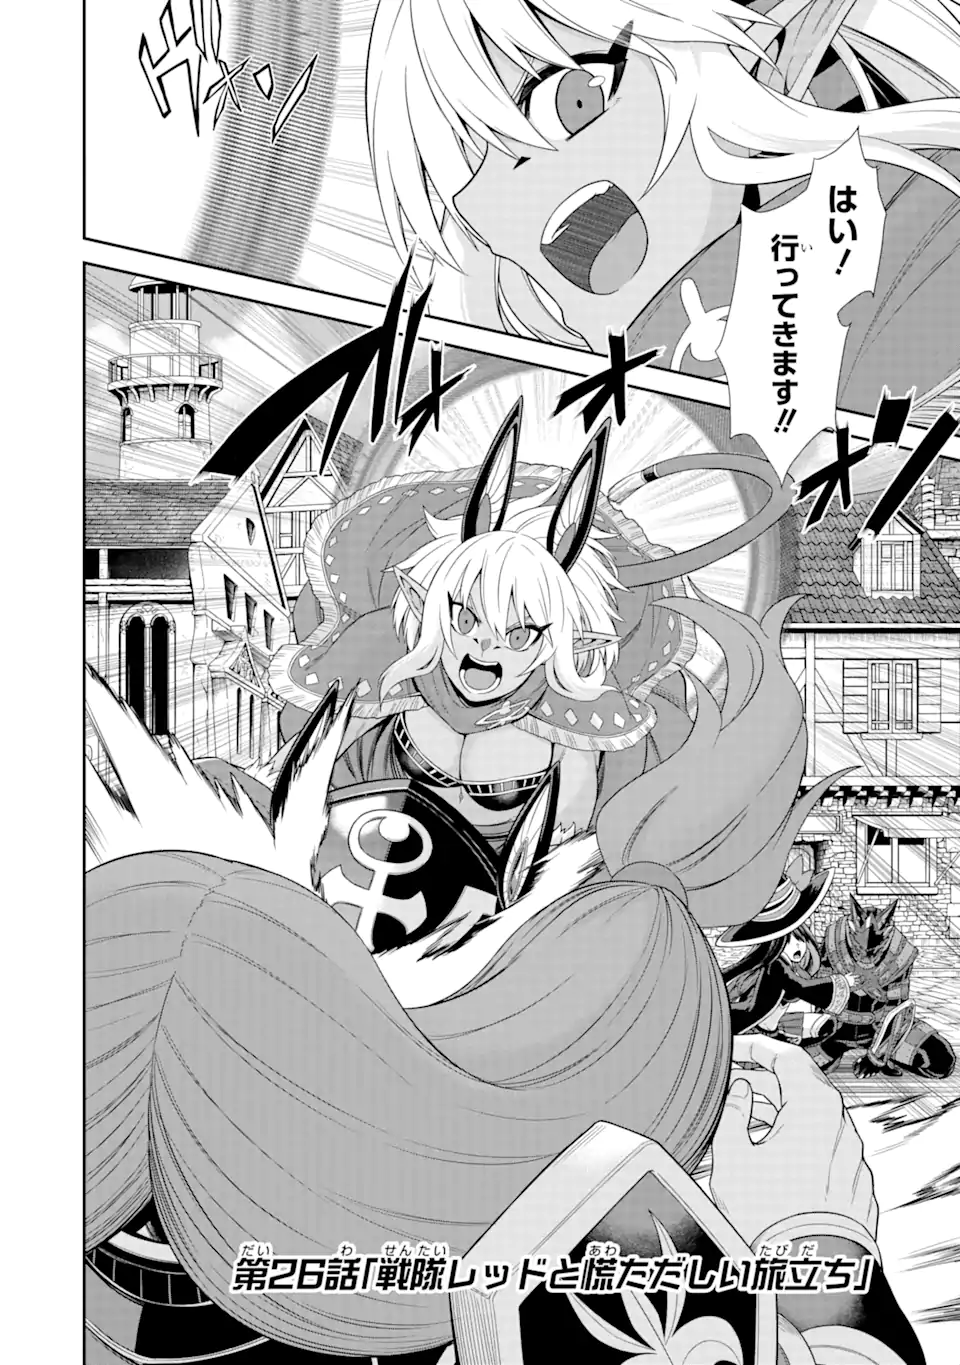 Sentai Red Isekai de Boukensha ni Naru - Chapter 26.1 - Page 2